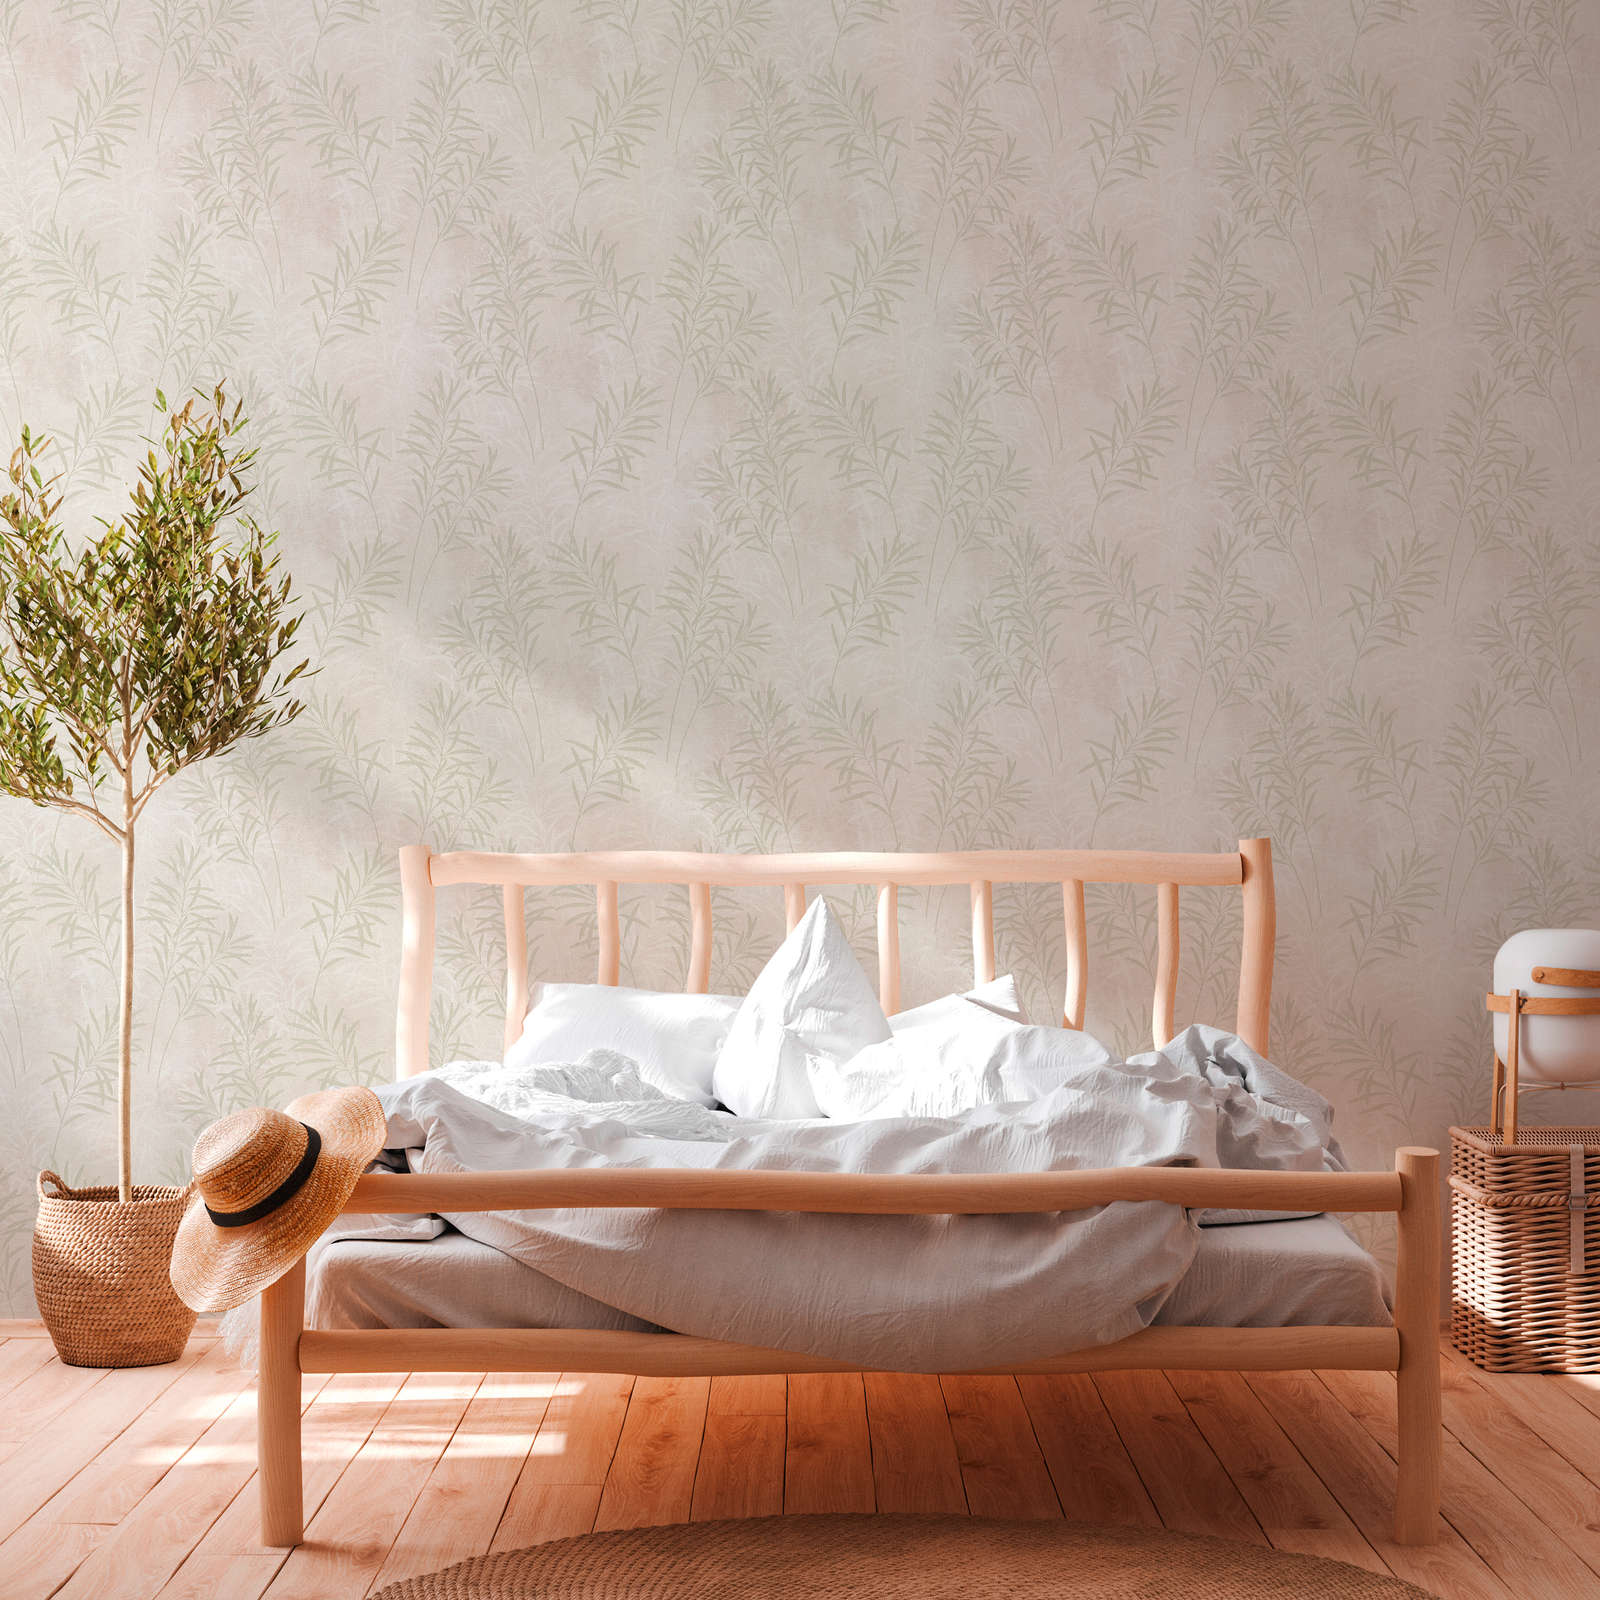             Scandinavian style non-woven wallpaper with floral grasses - cream, green, metallic
        